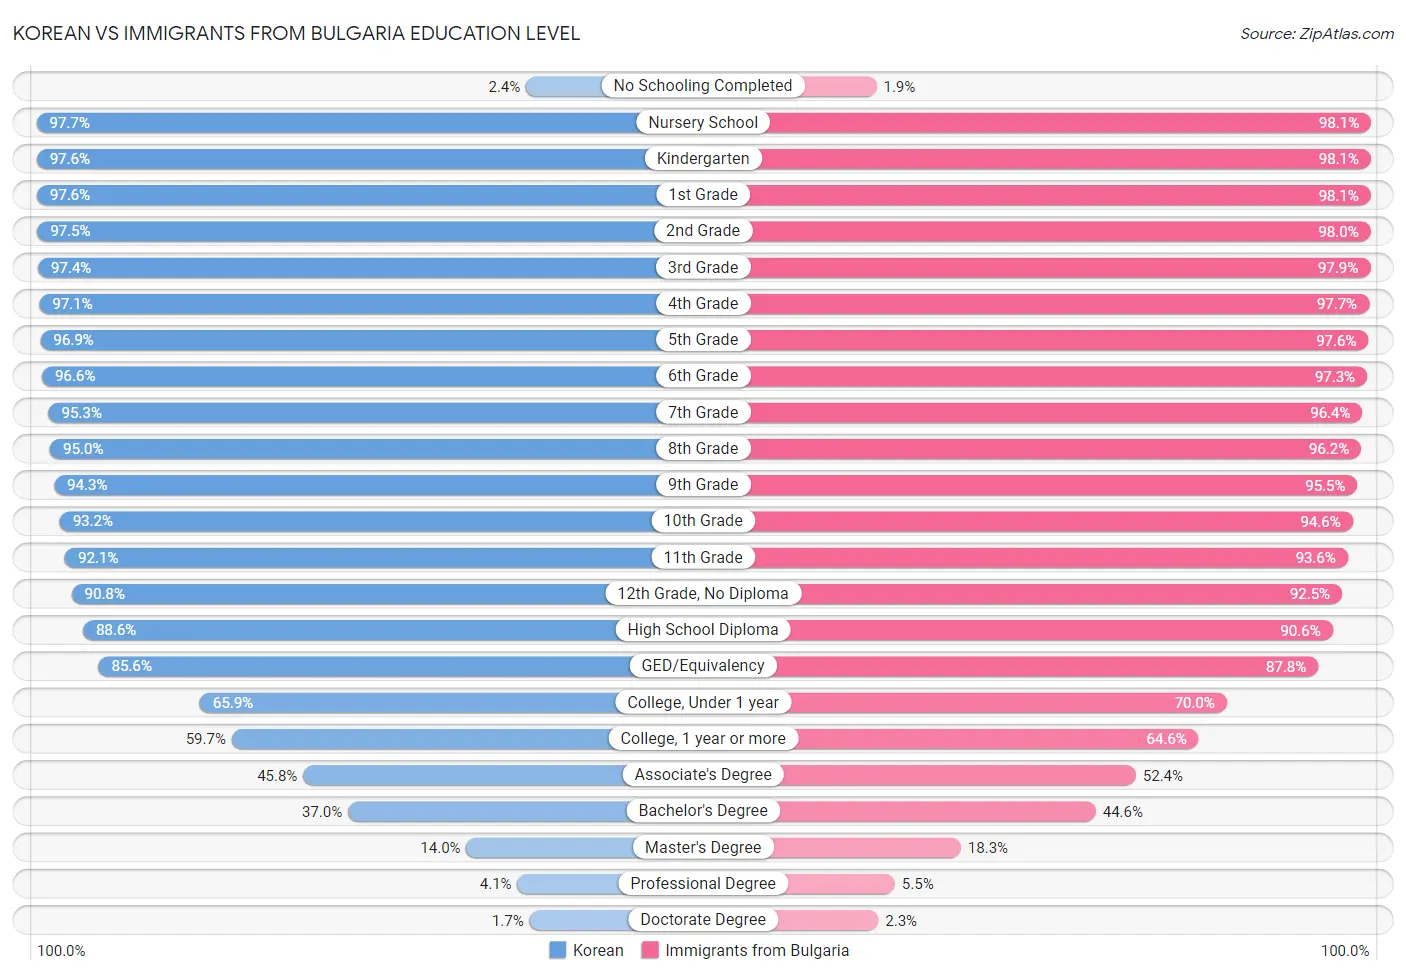 Korean vs Immigrants from Bulgaria Education Level